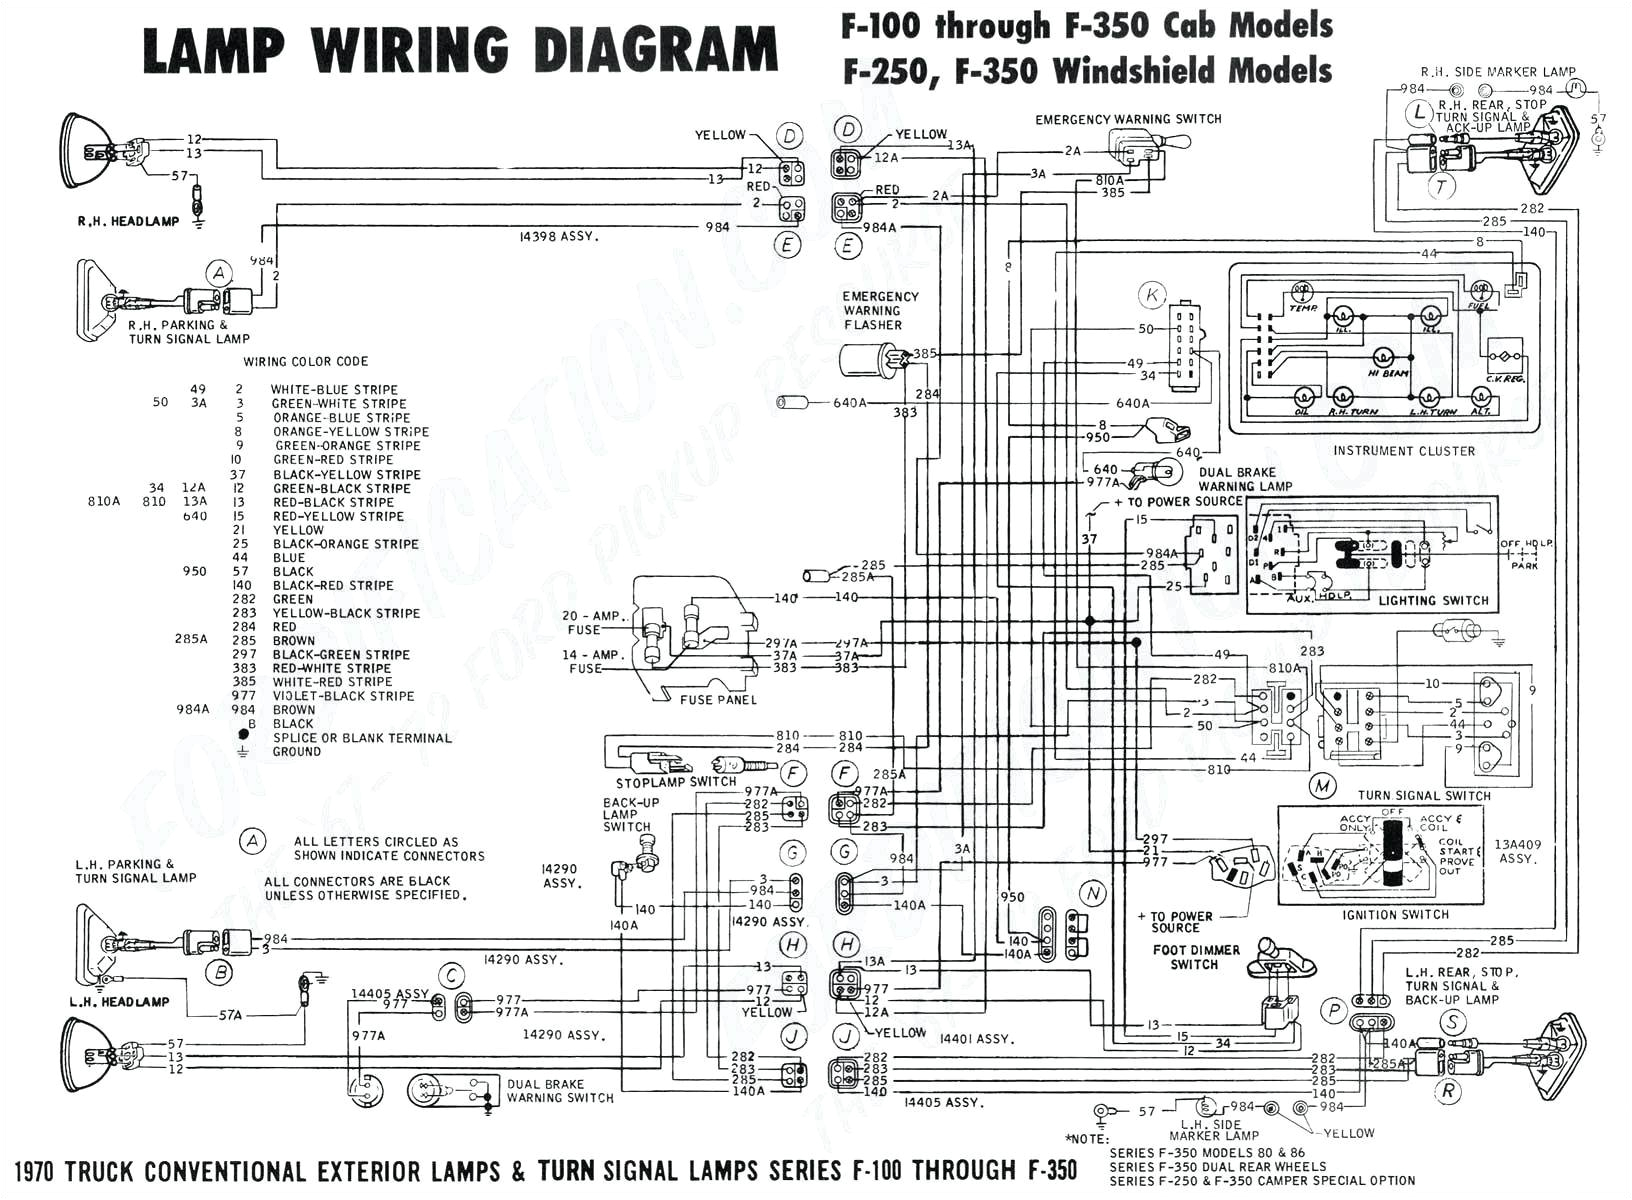 Electric Brakes Wiring Diagram Exiss Wiring Diagram Wiring Diagram Post